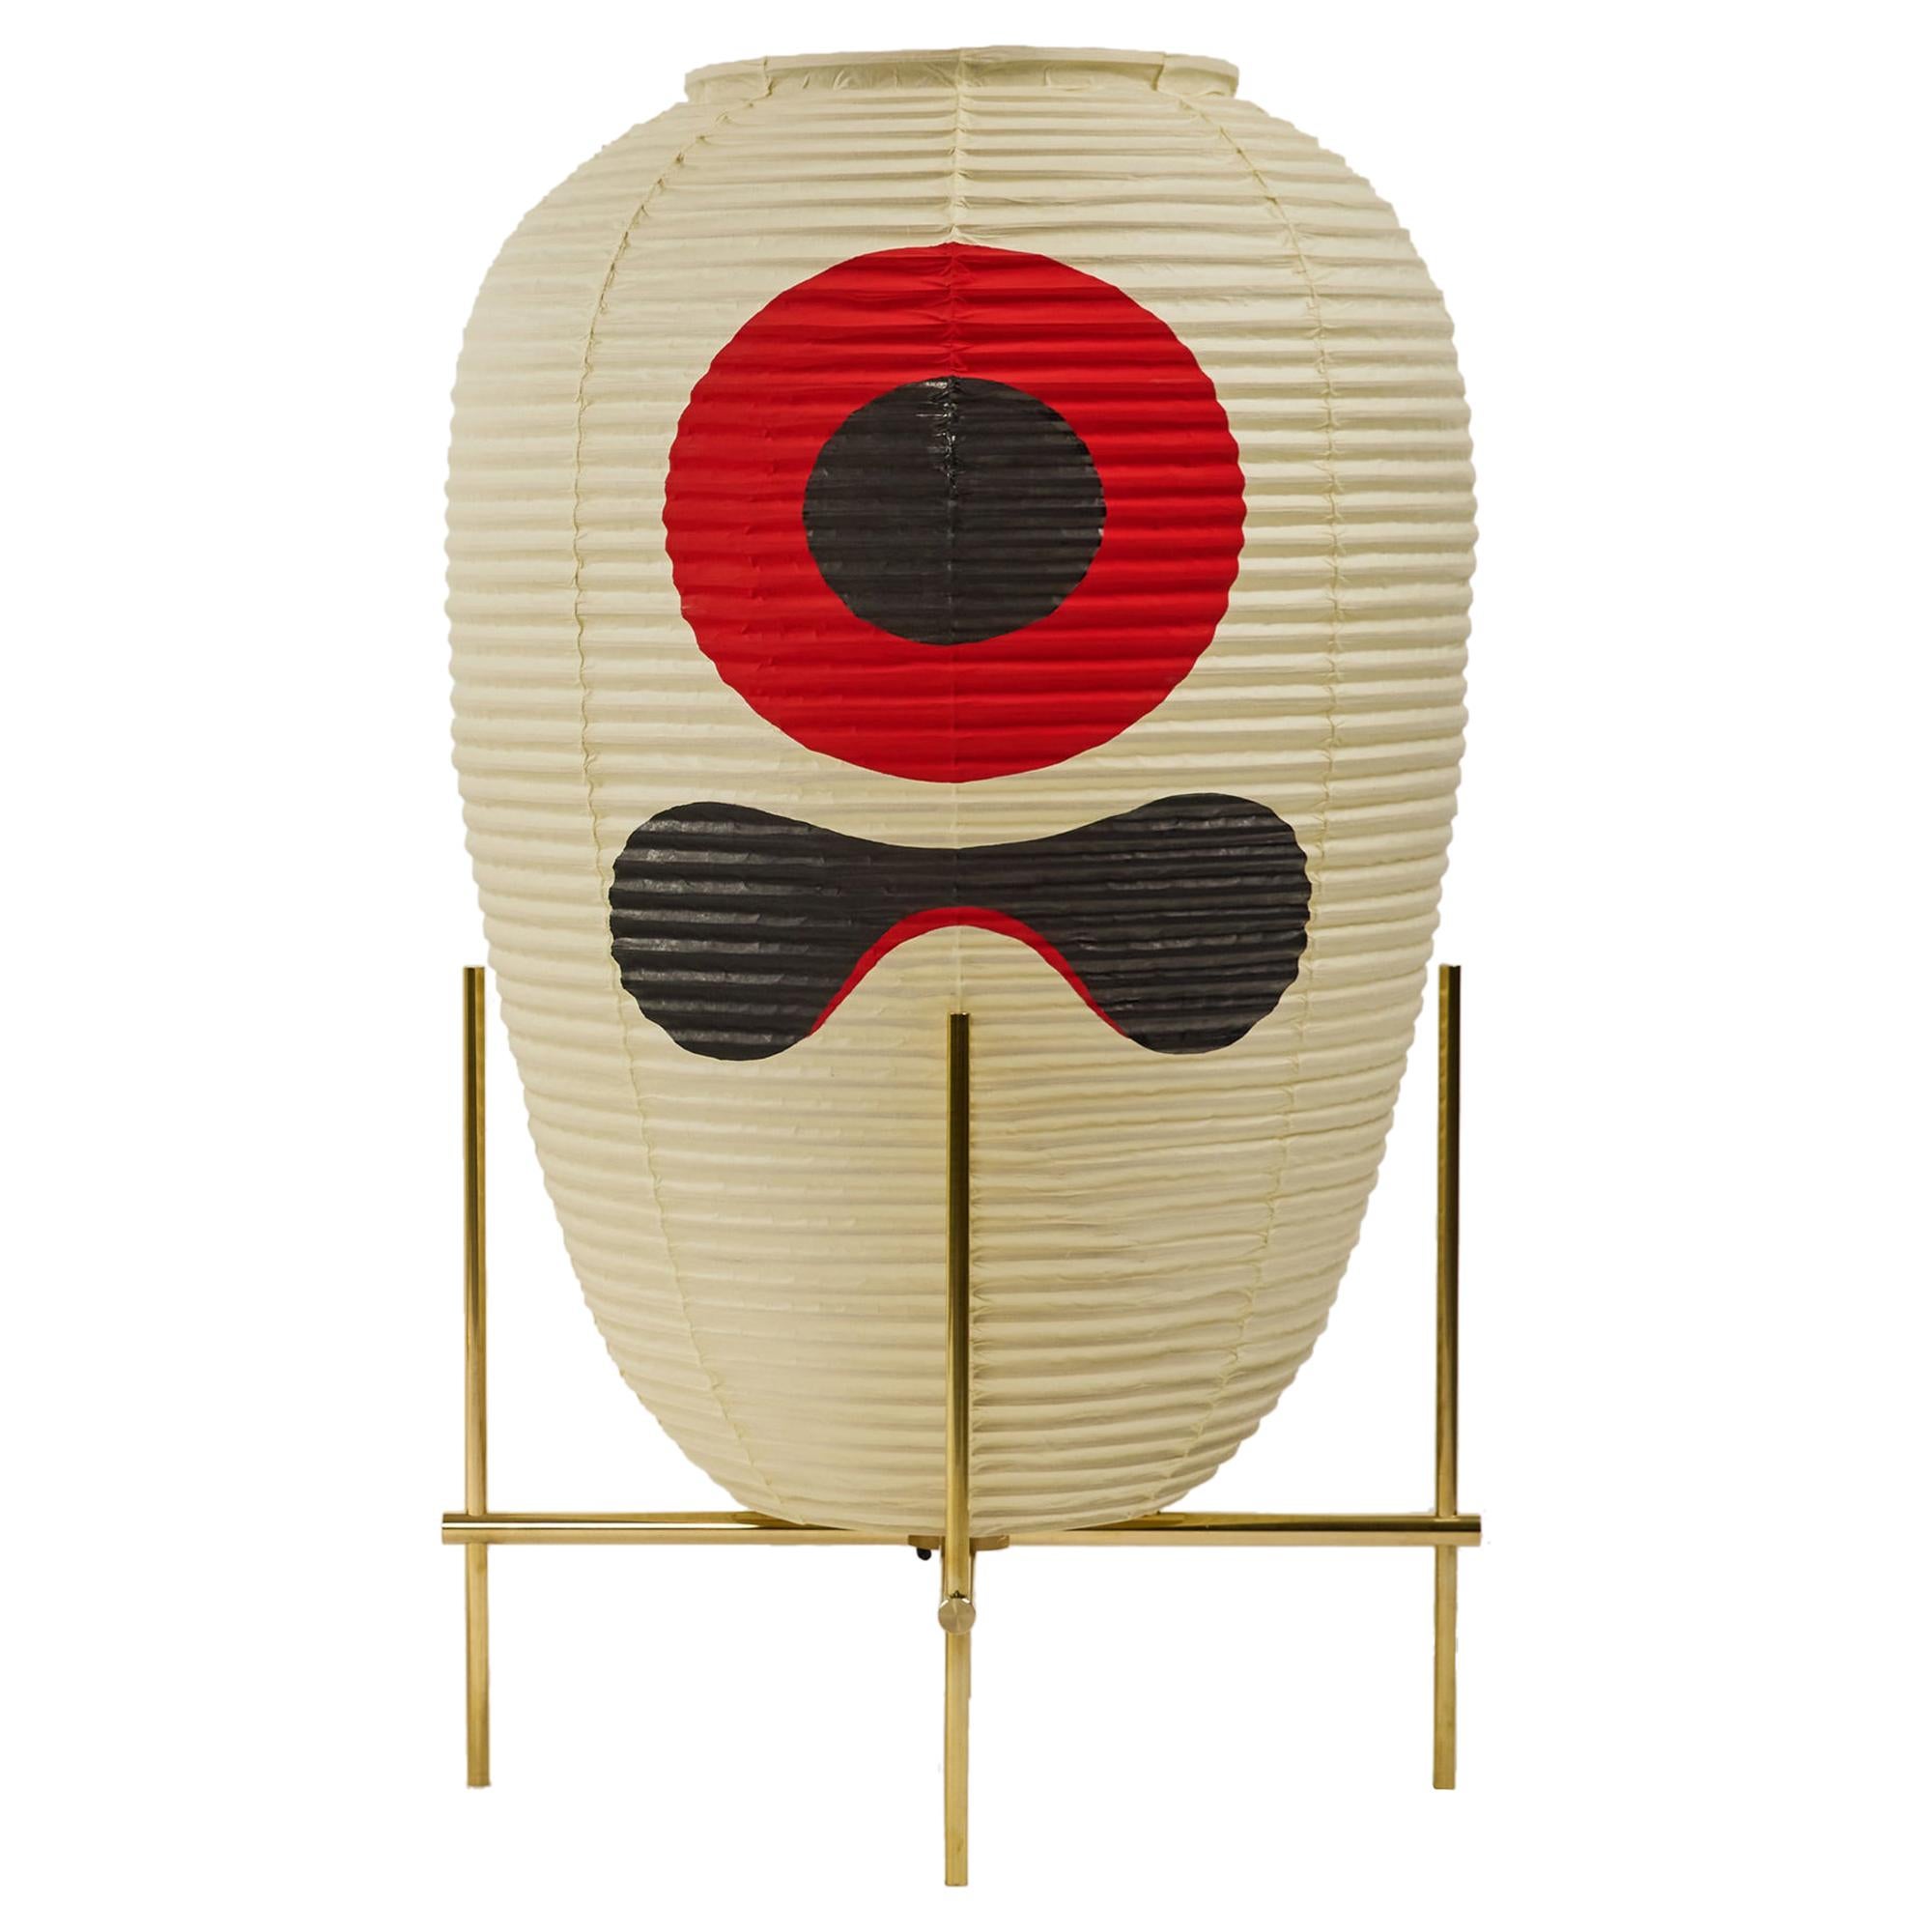 Contemporary Japanese Chochin Floor Lamp Limited Edition #1 Zen Washi